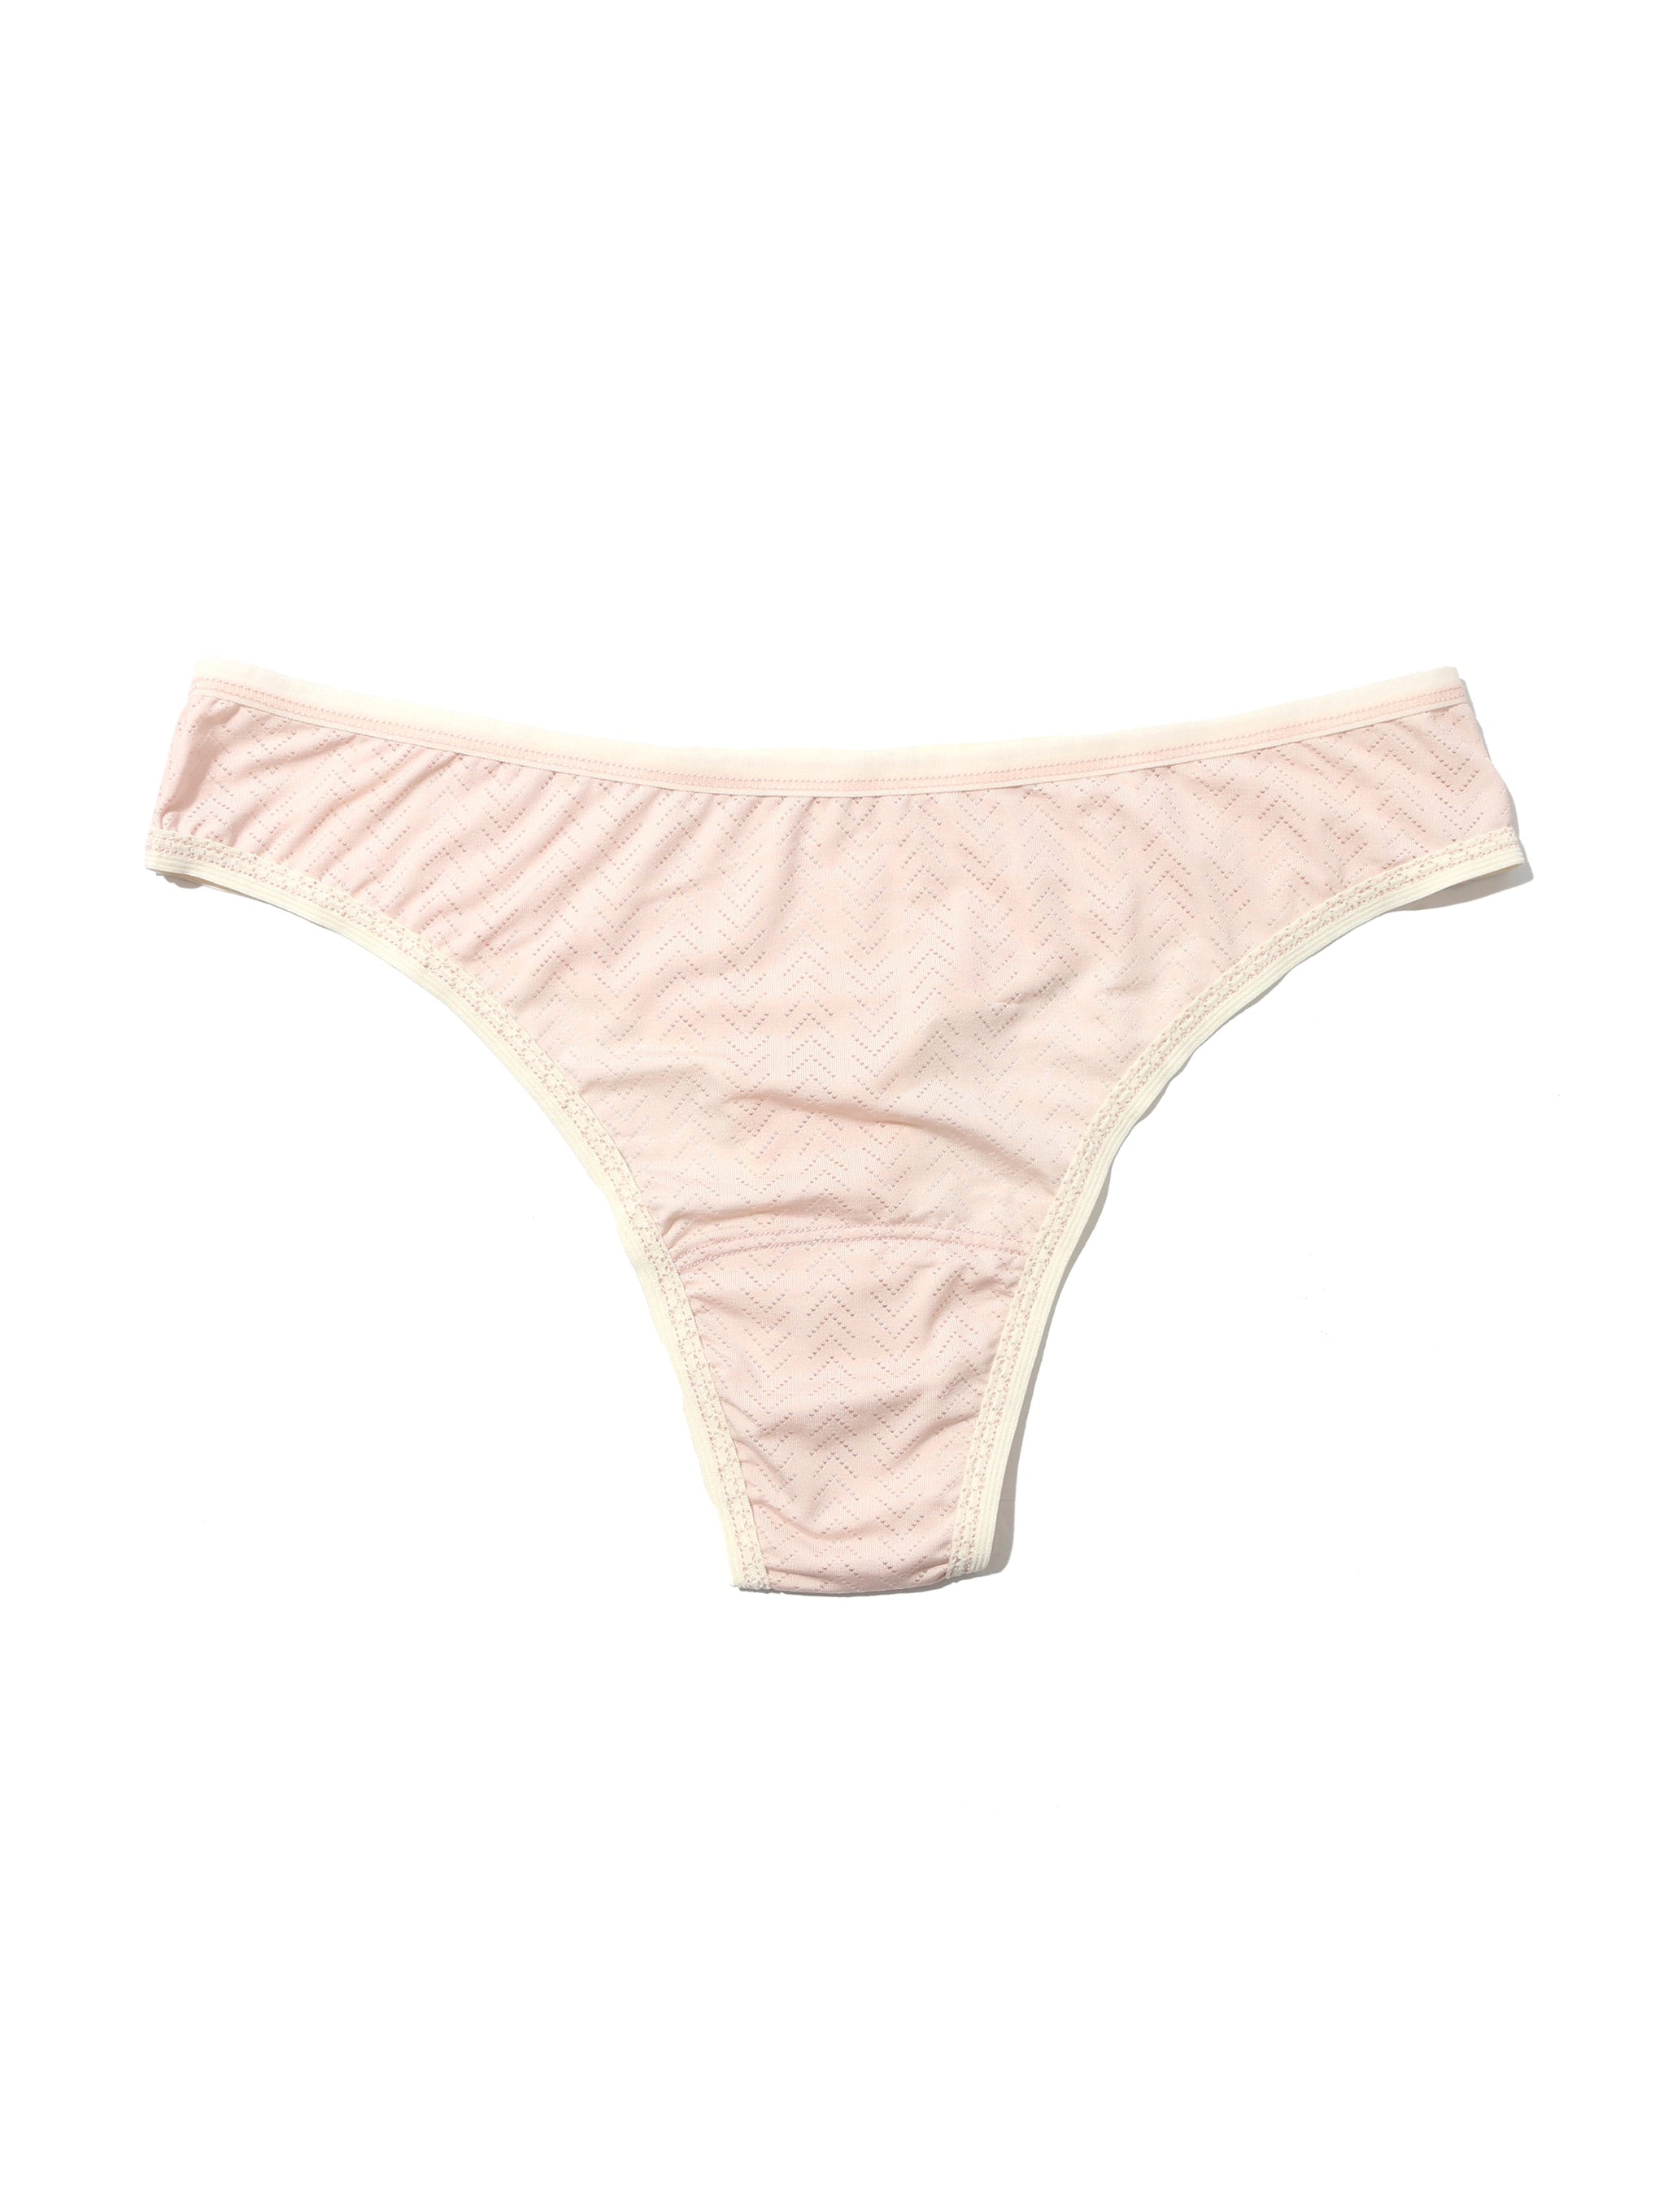 Nude Pink microfiber brief Micro Lace Panty Box